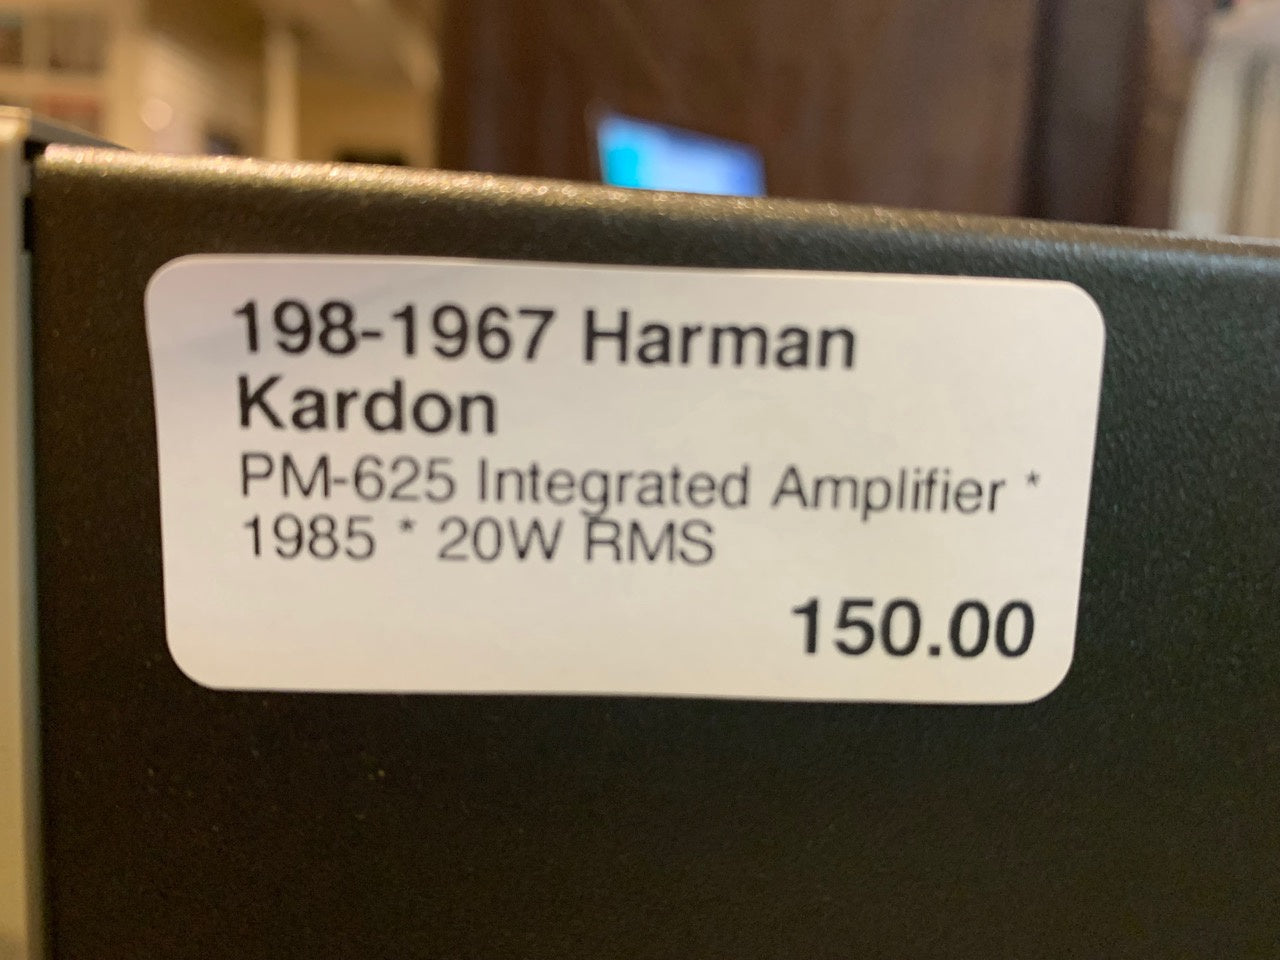 Harman Kardon PM-625 Integrated Amplifier * 20W RMS * 1985